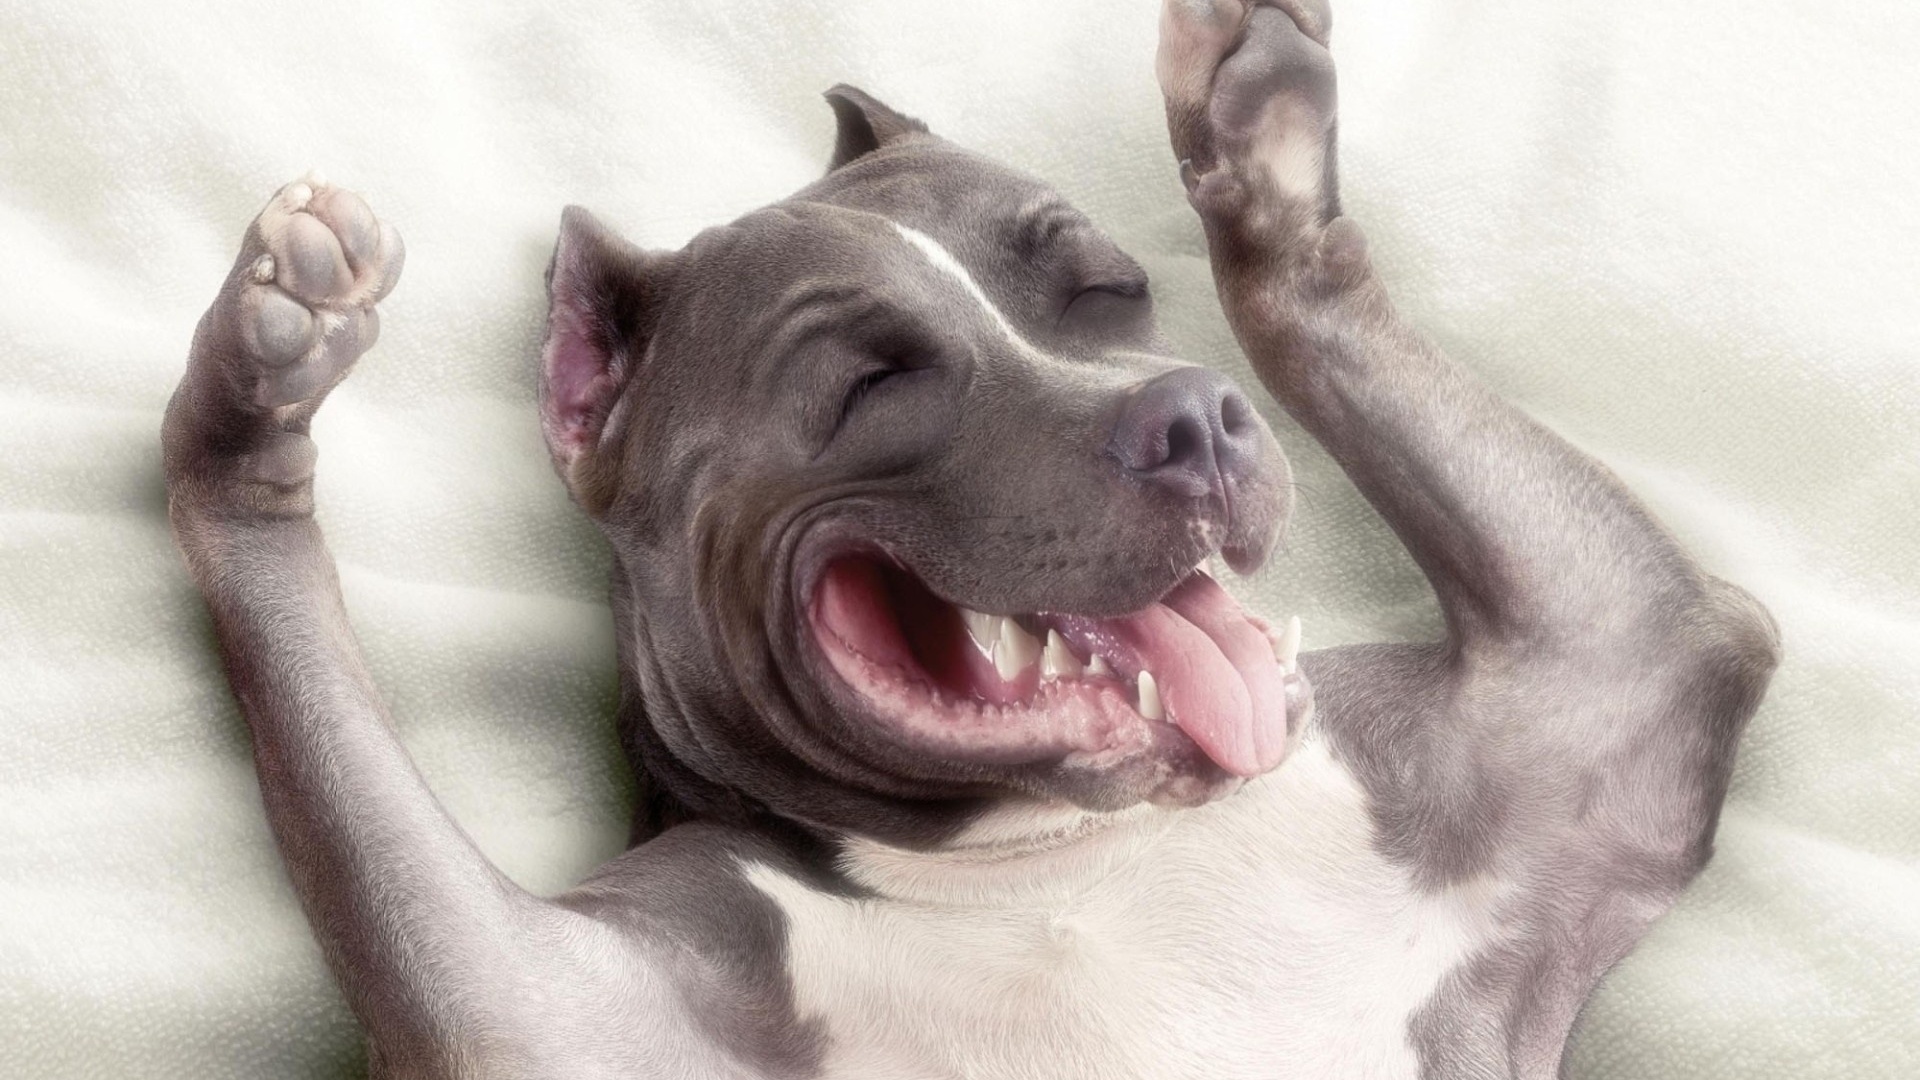 Dog HD Wallpaper New Fresh Image Of Pitbull